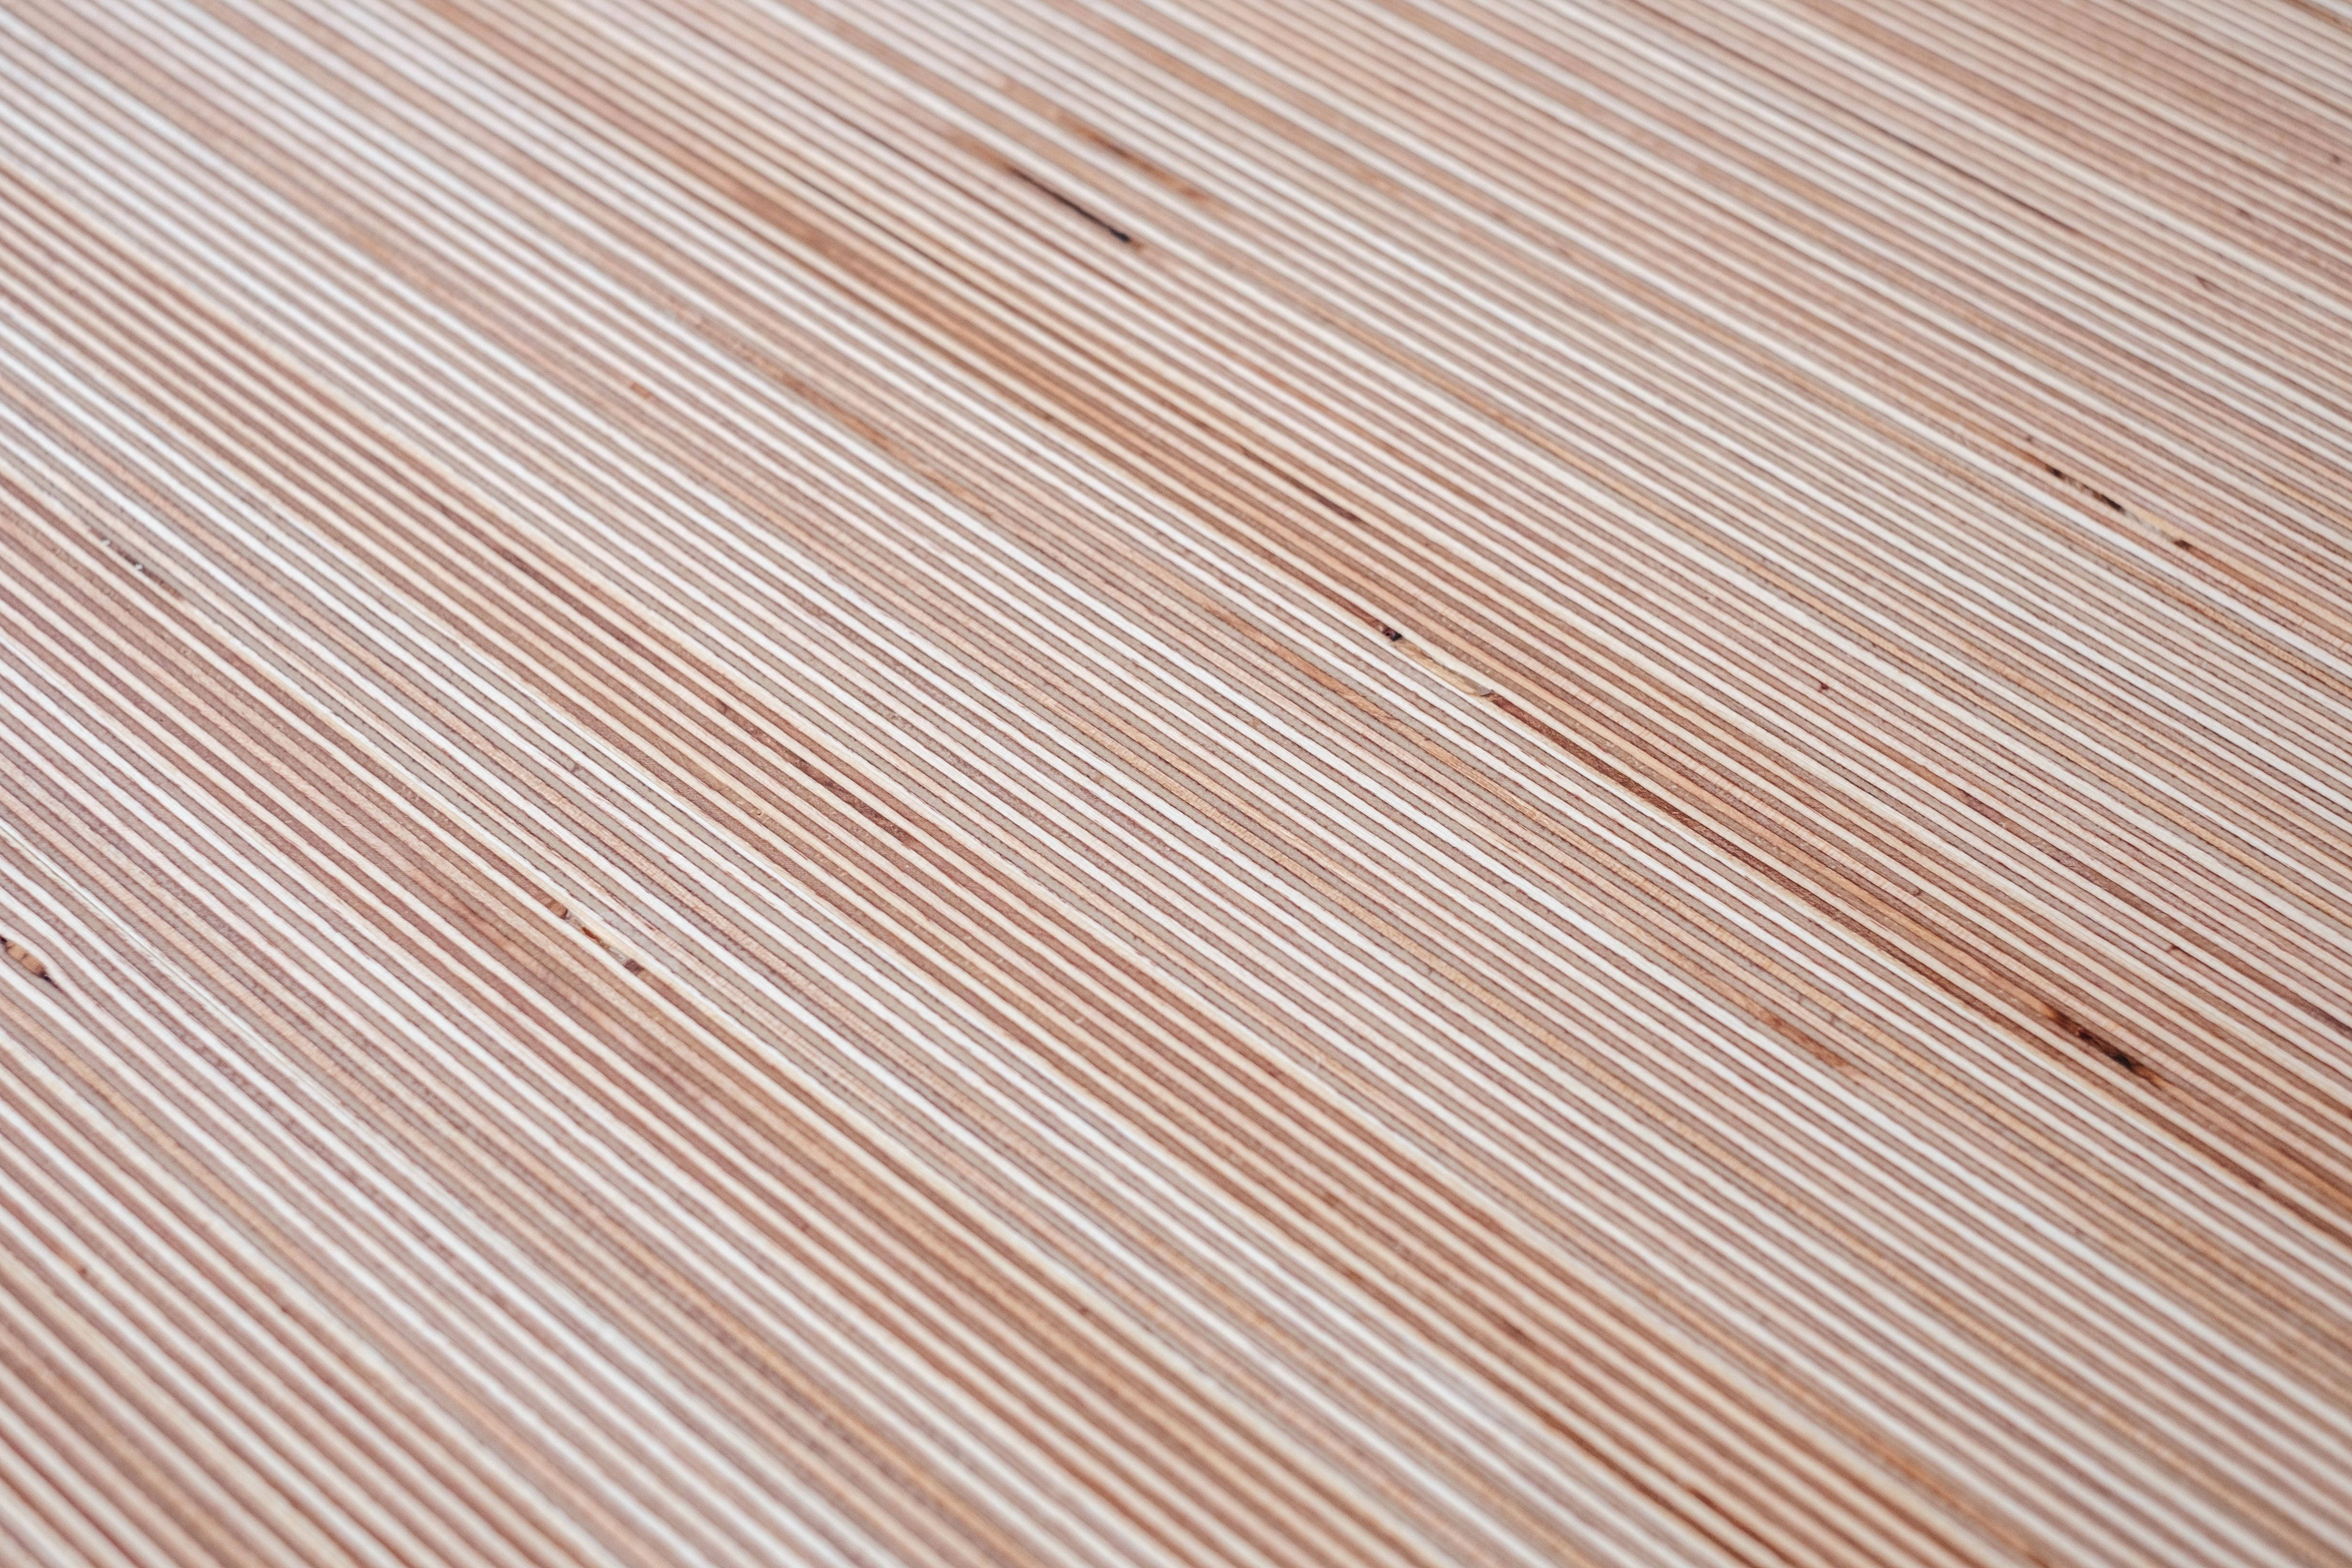 Brown Aesthetic Wood Texture Laptop Wallpaper